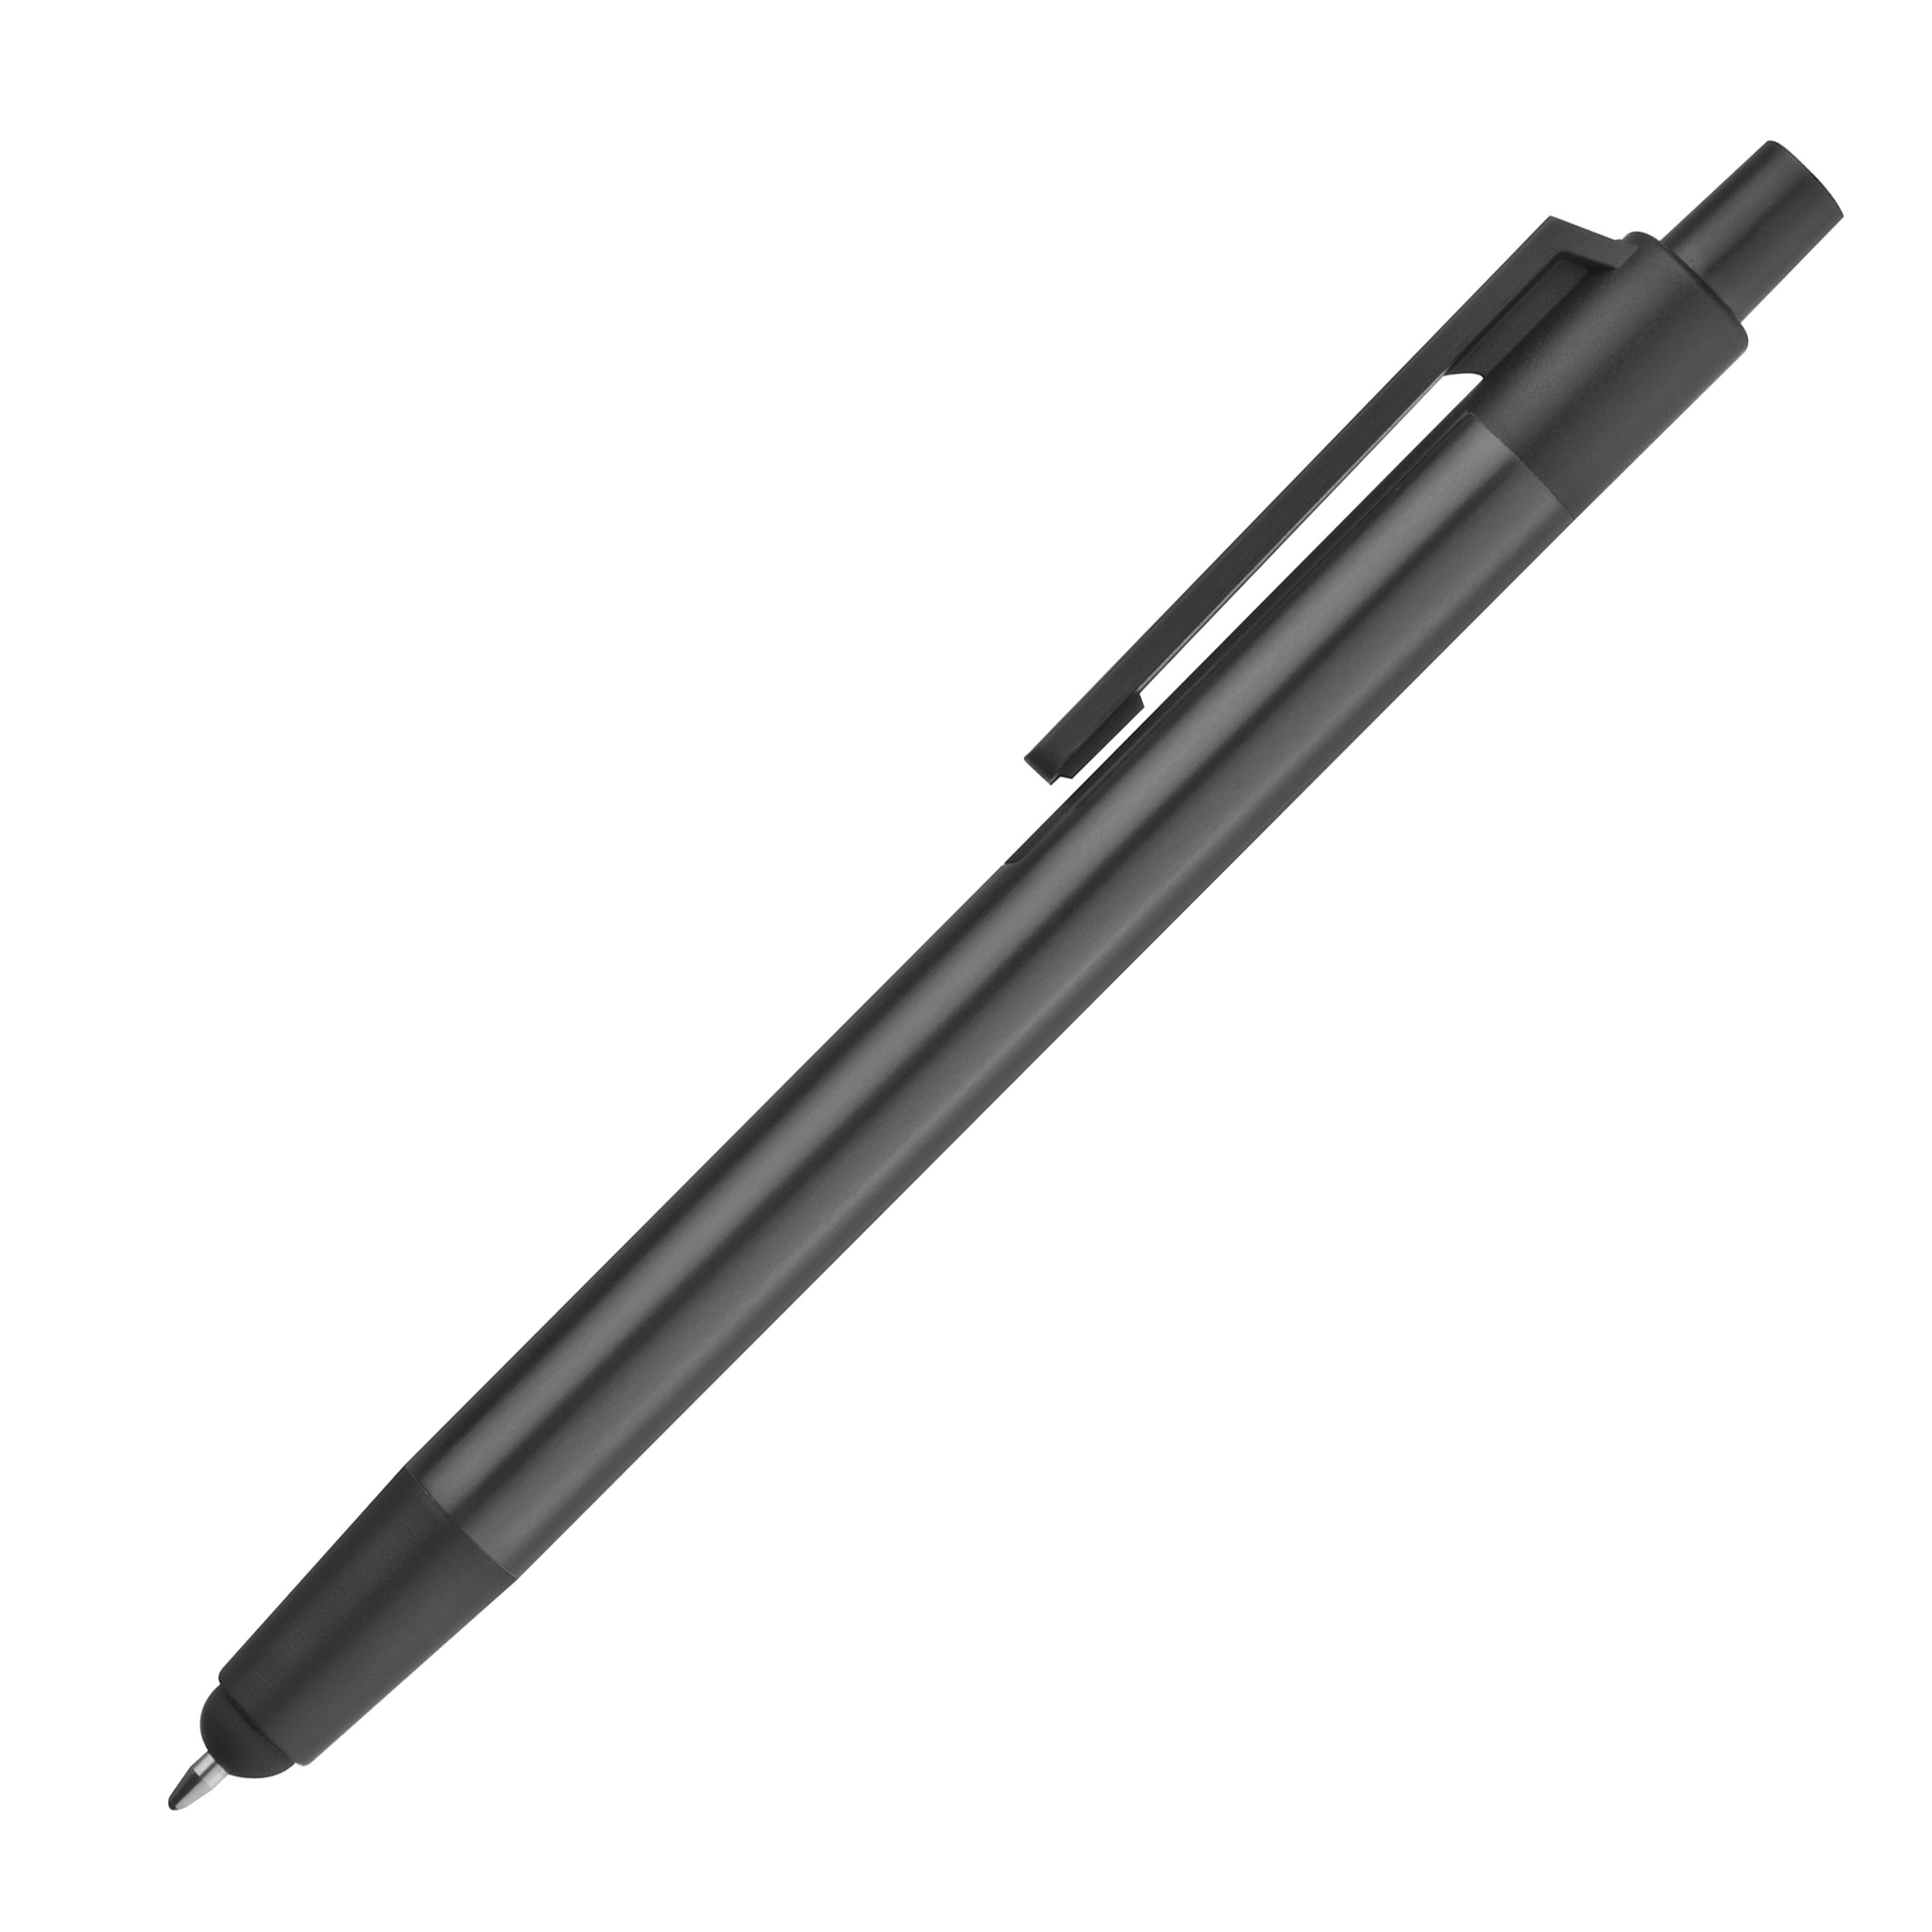 Metal ball pen